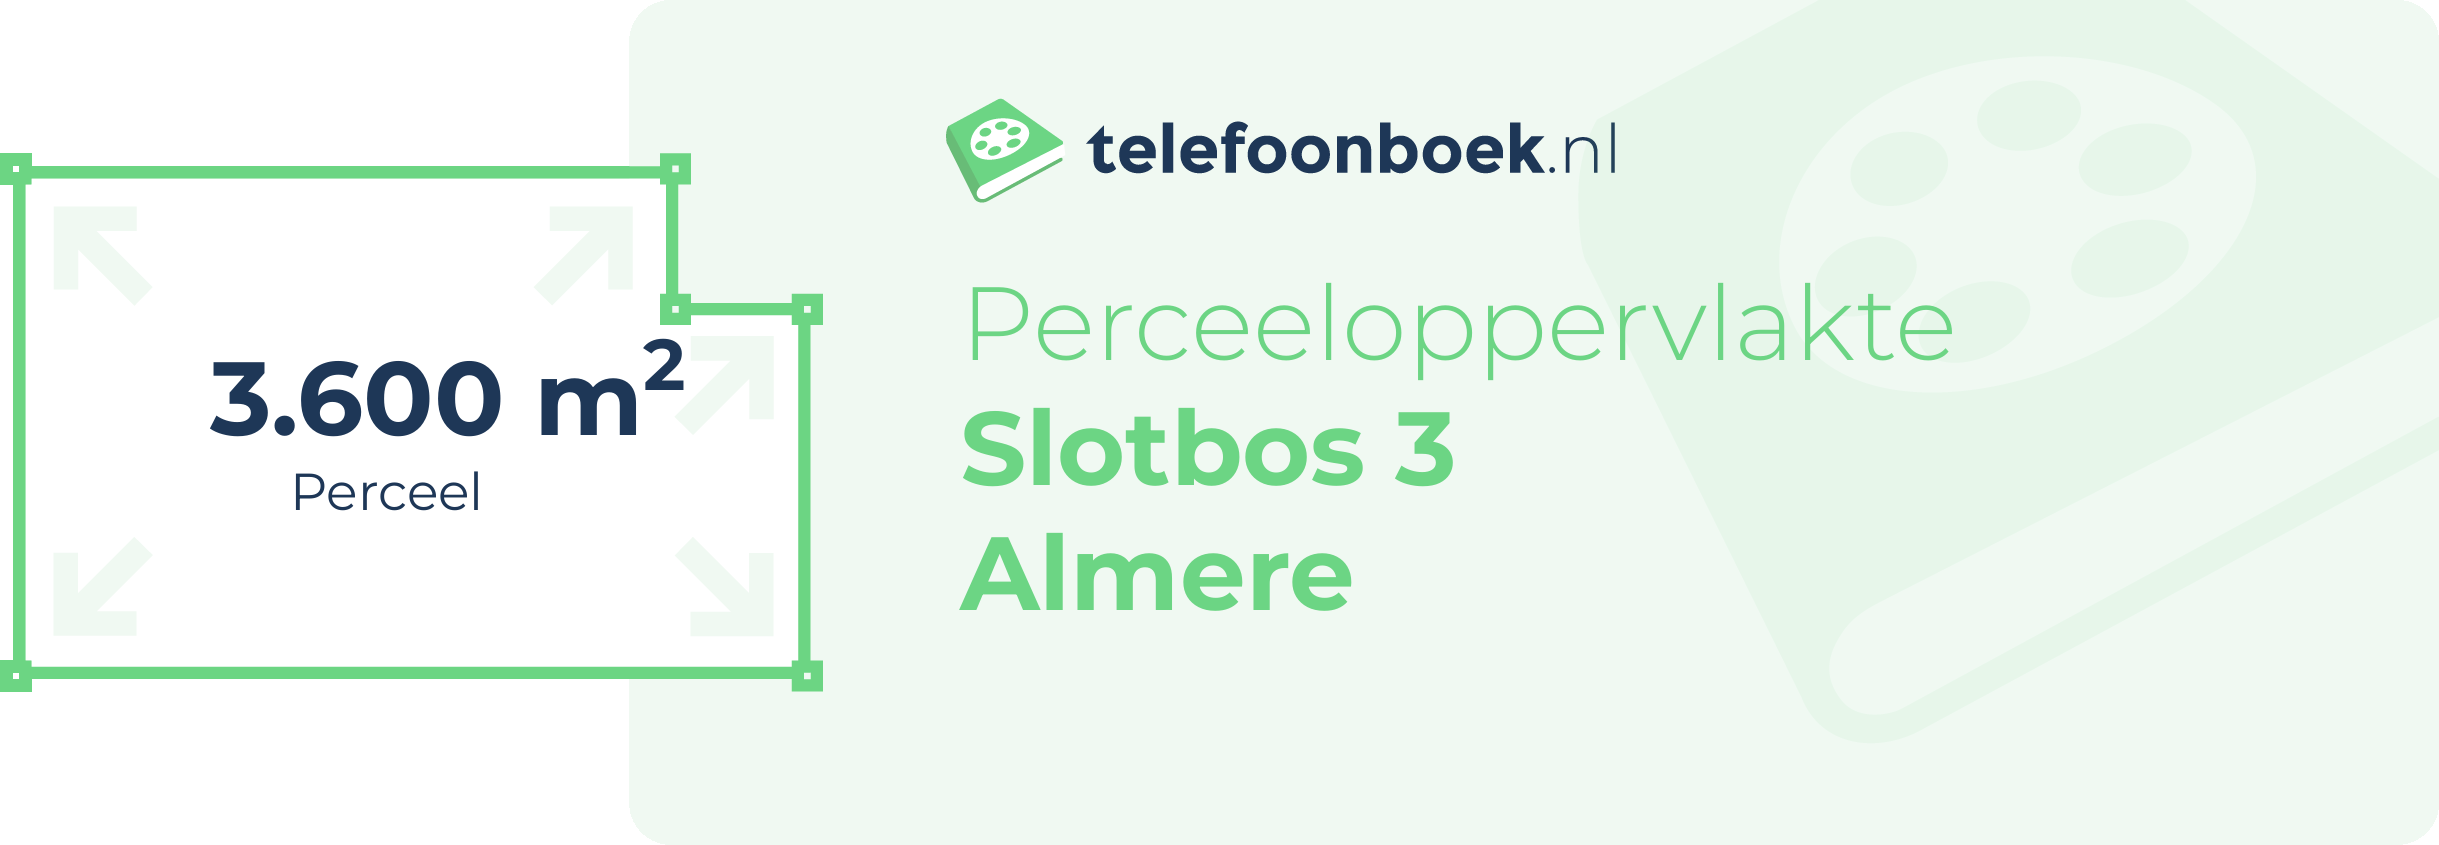 Perceeloppervlakte Slotbos 3 Almere